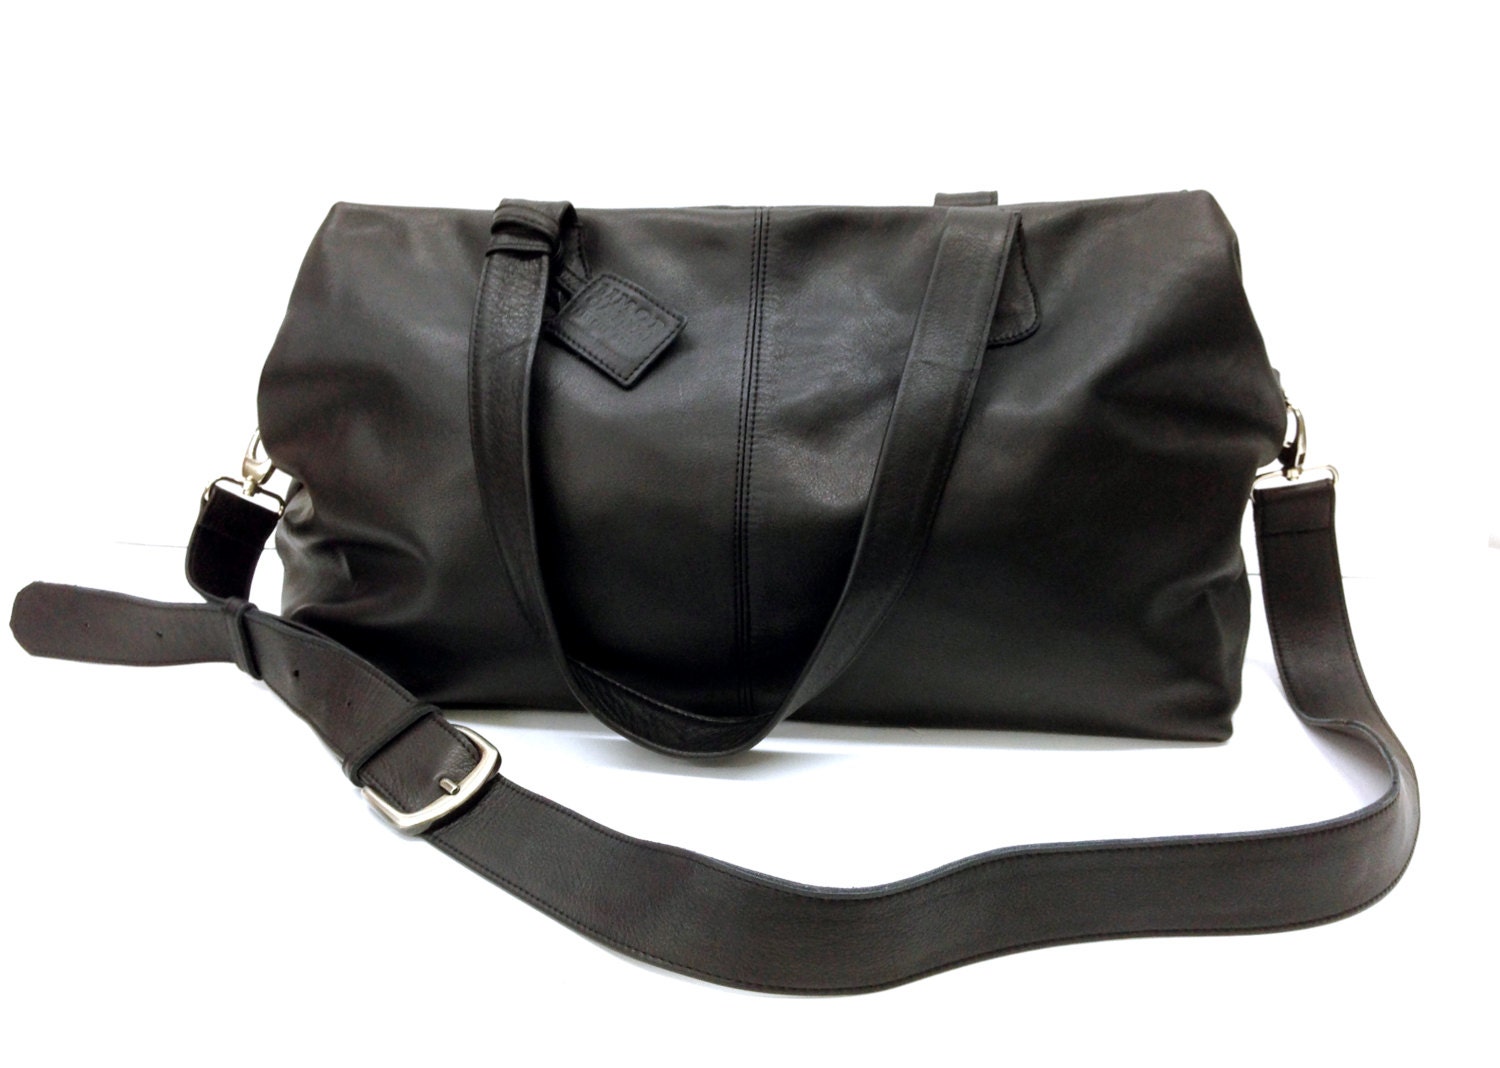 Sale Black Leather duffle bag Leather Sports Bag Gym Bag | Etsy